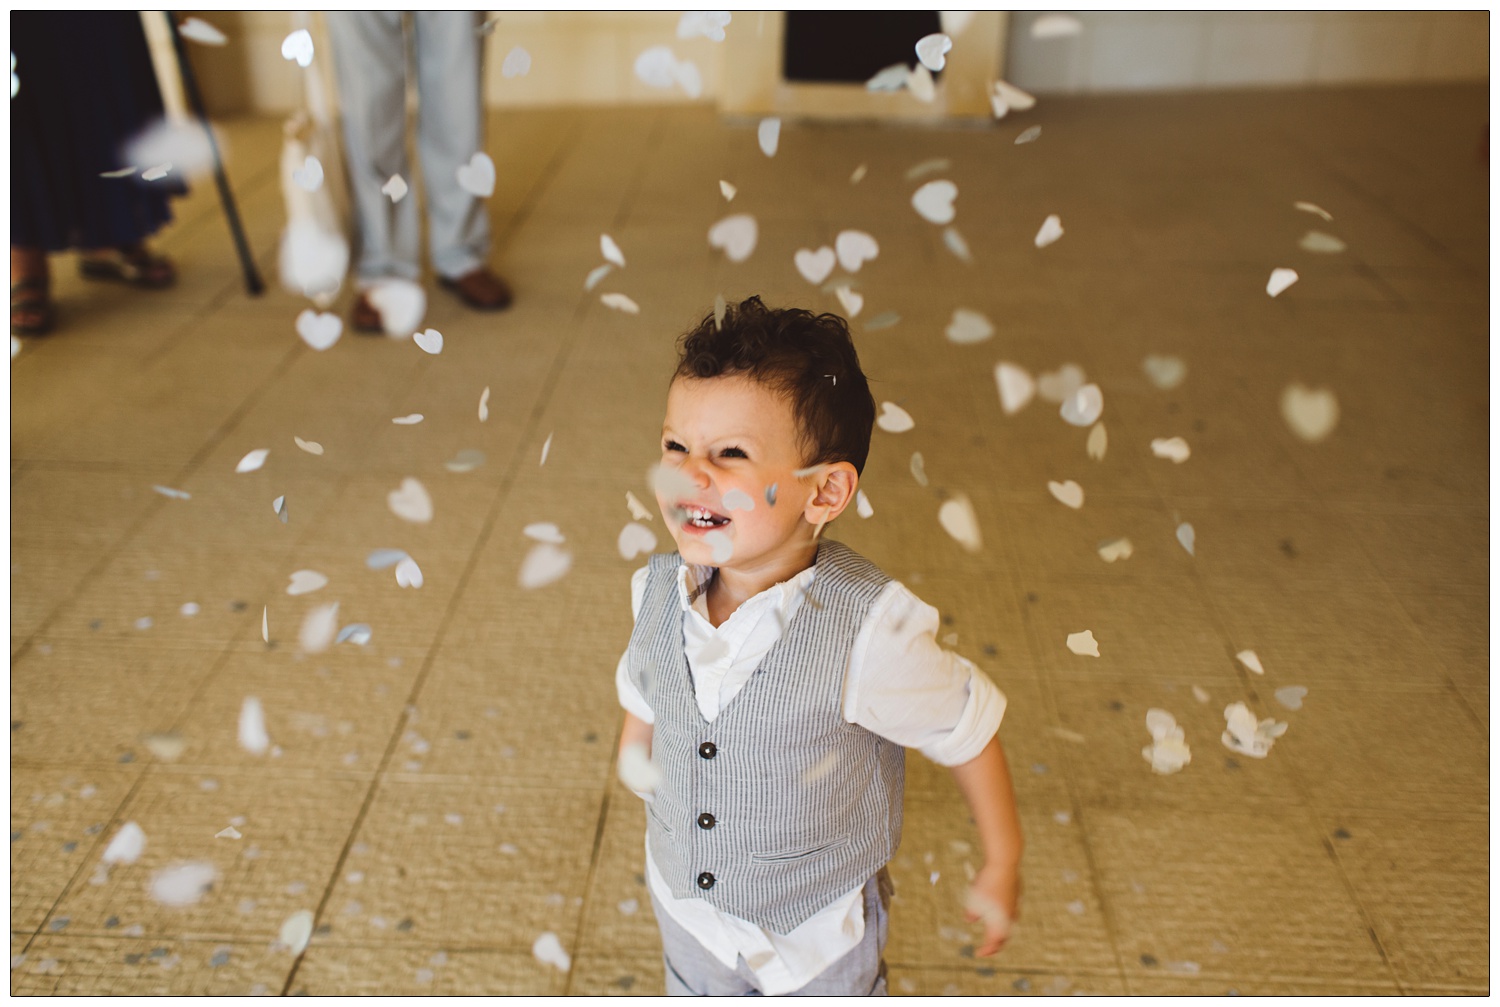 little boy in a waistcoat throwing confetti over himself